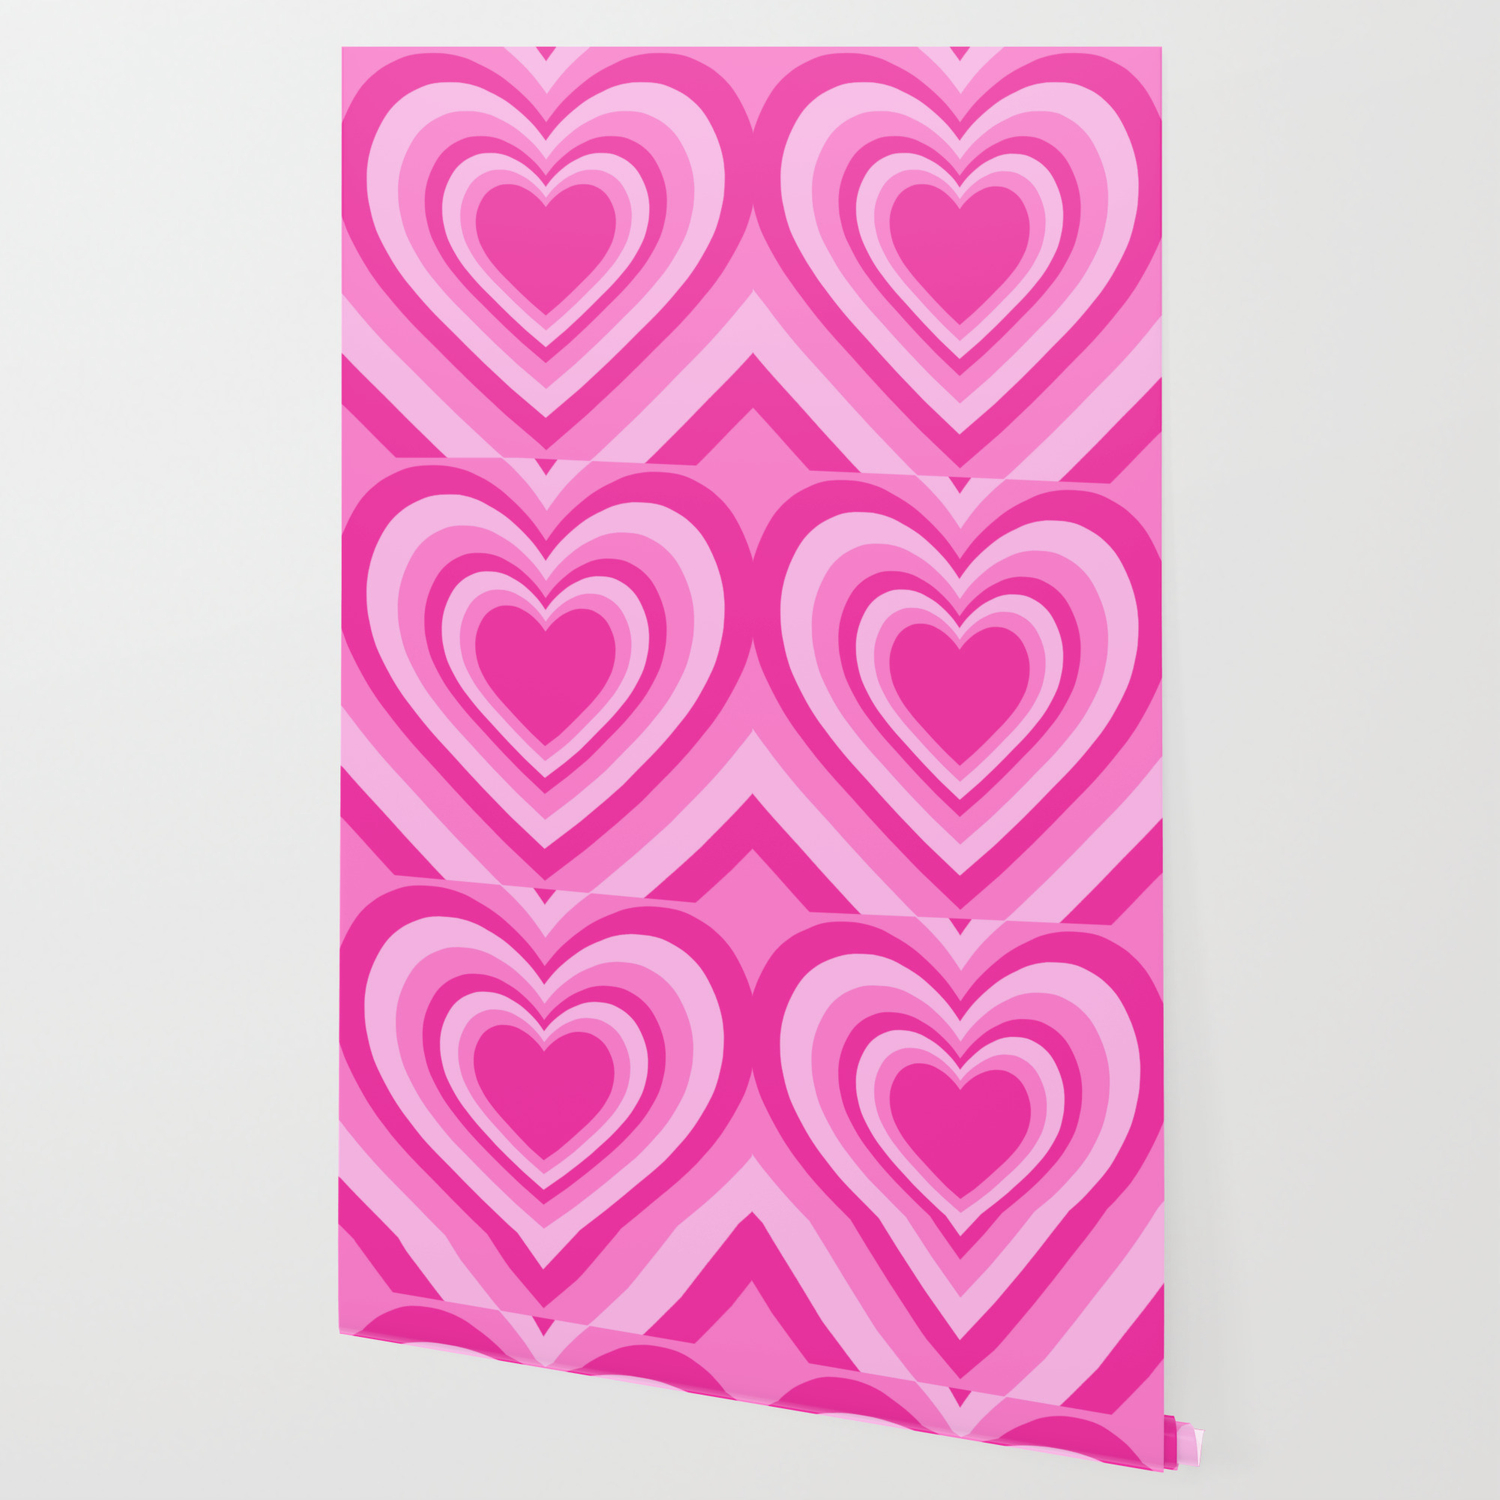 Beating heart pink wallpaper by jodi feddon